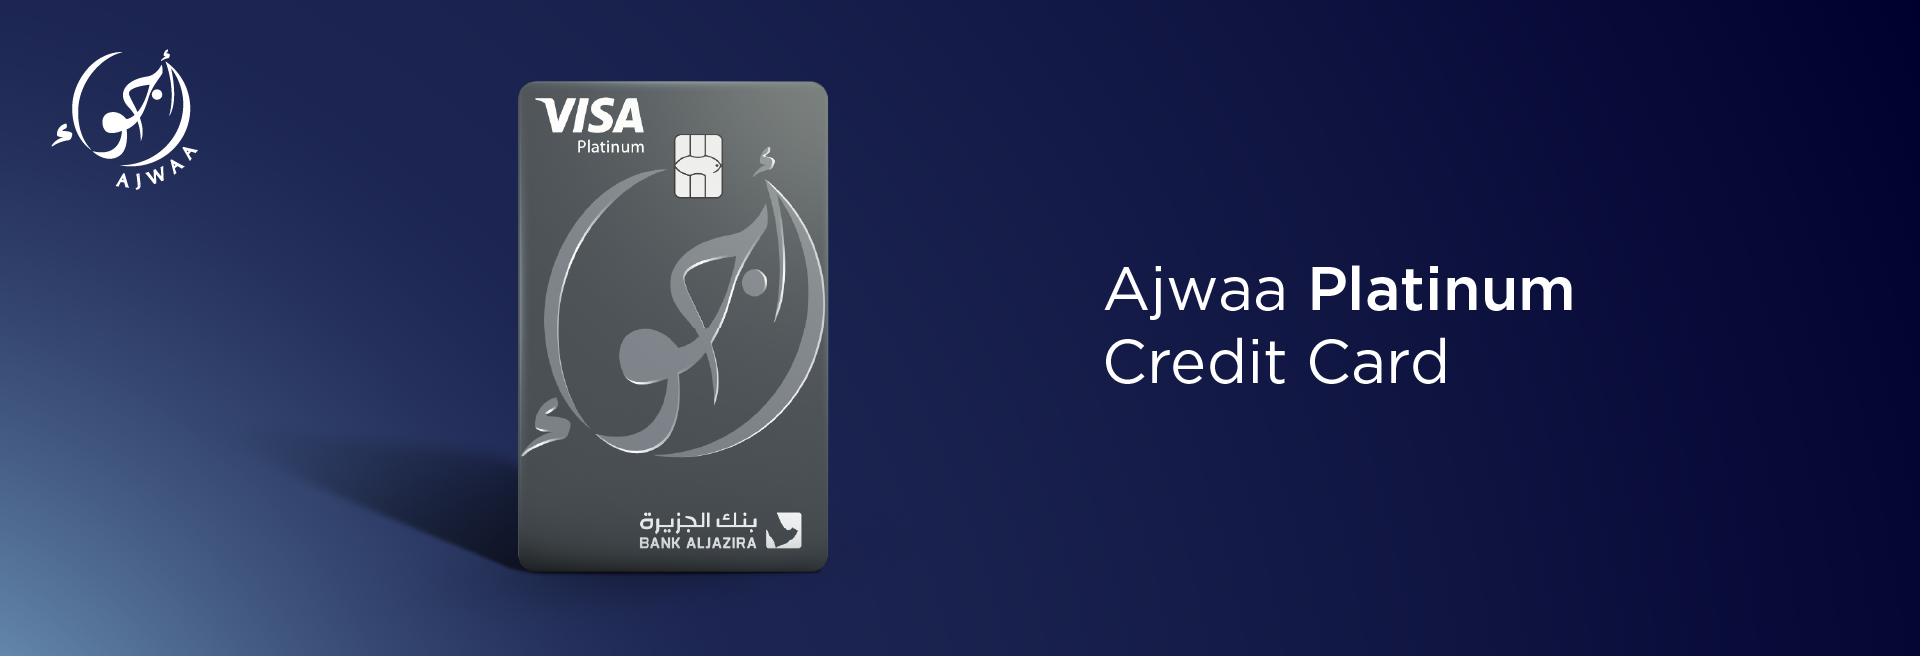 Ajwaa Platinum Card Benefits